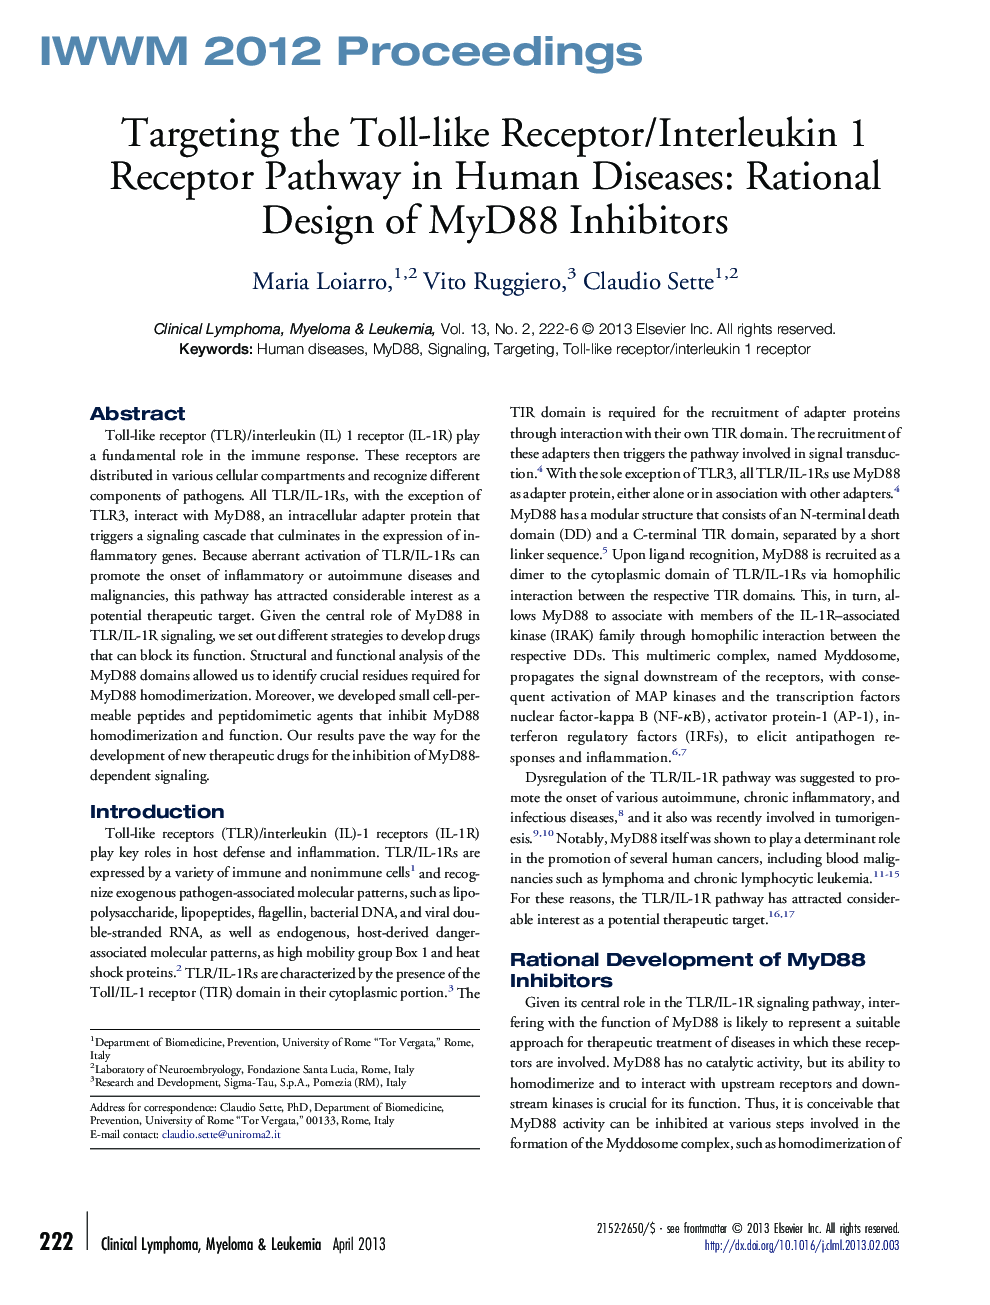 Targeting the Toll-like Receptor/Interleukin 1 Receptor Pathway in Human Diseases: Rational Design of MyD88 Inhibitors